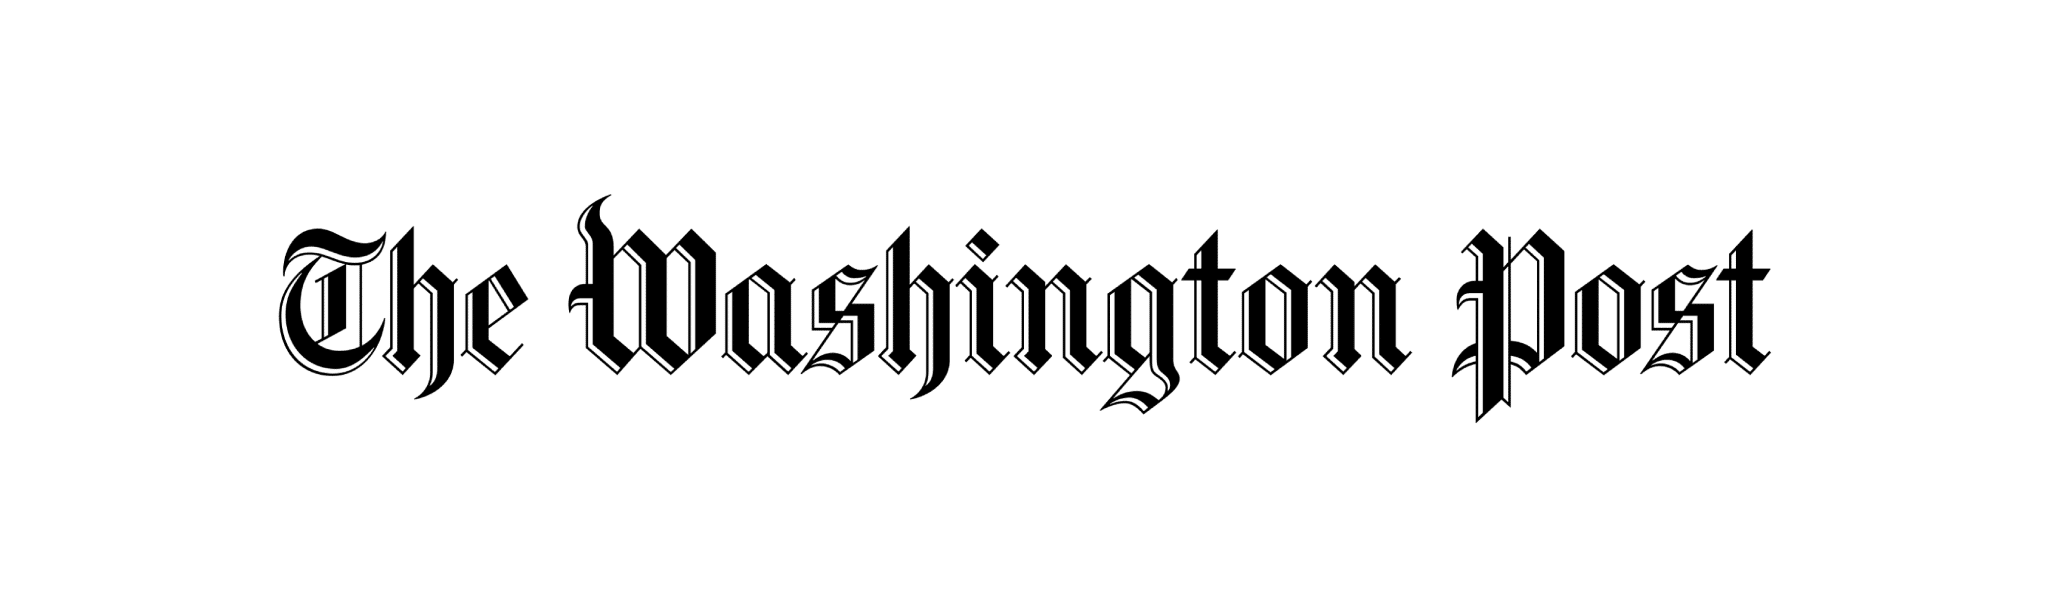 CFP Publication Logos The Washington Post